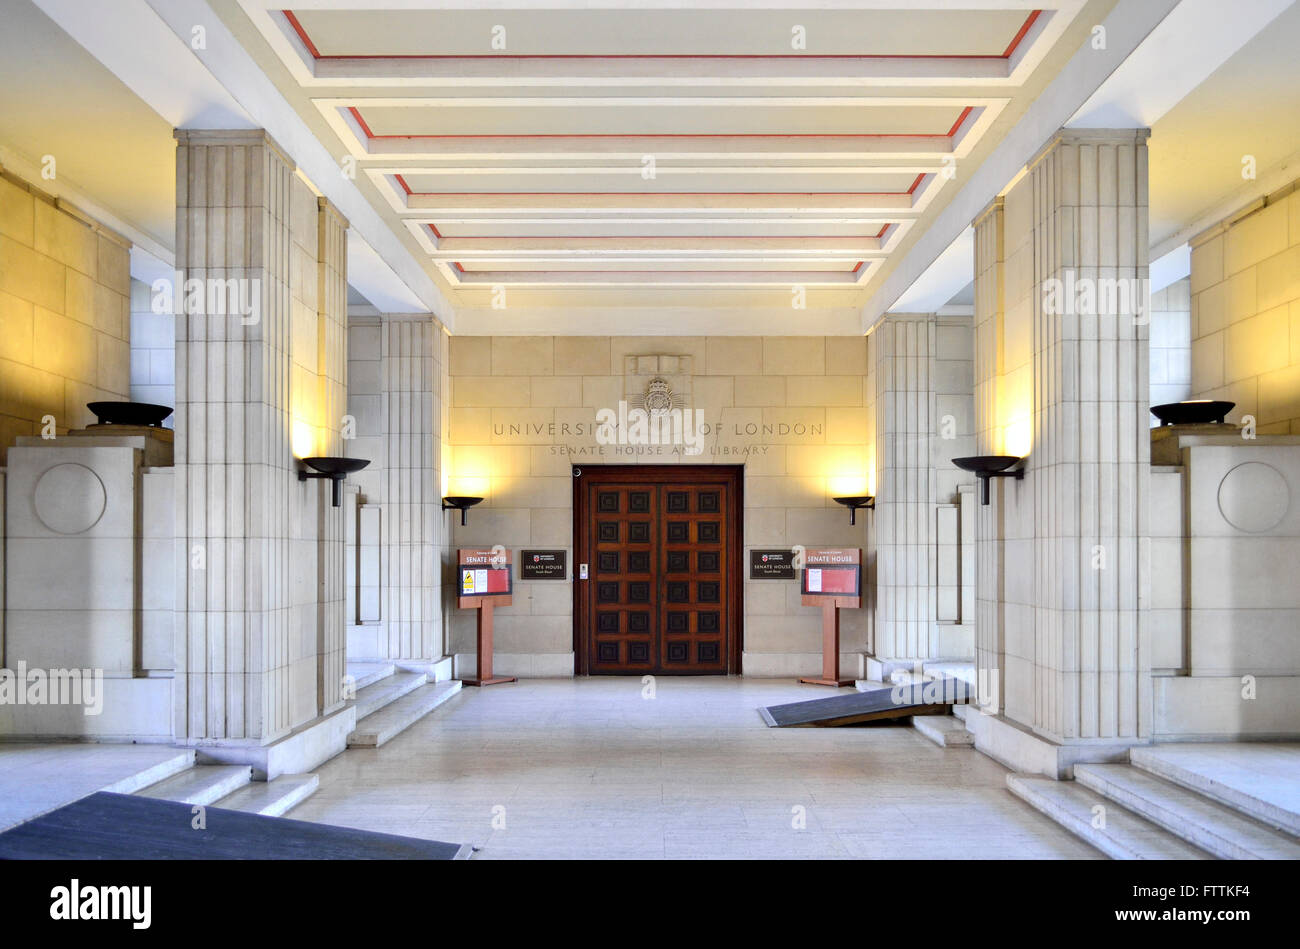 London, England, UK. Senate House and Library, University of London, Bloomsbury. Ground floor entrance Stock Photo